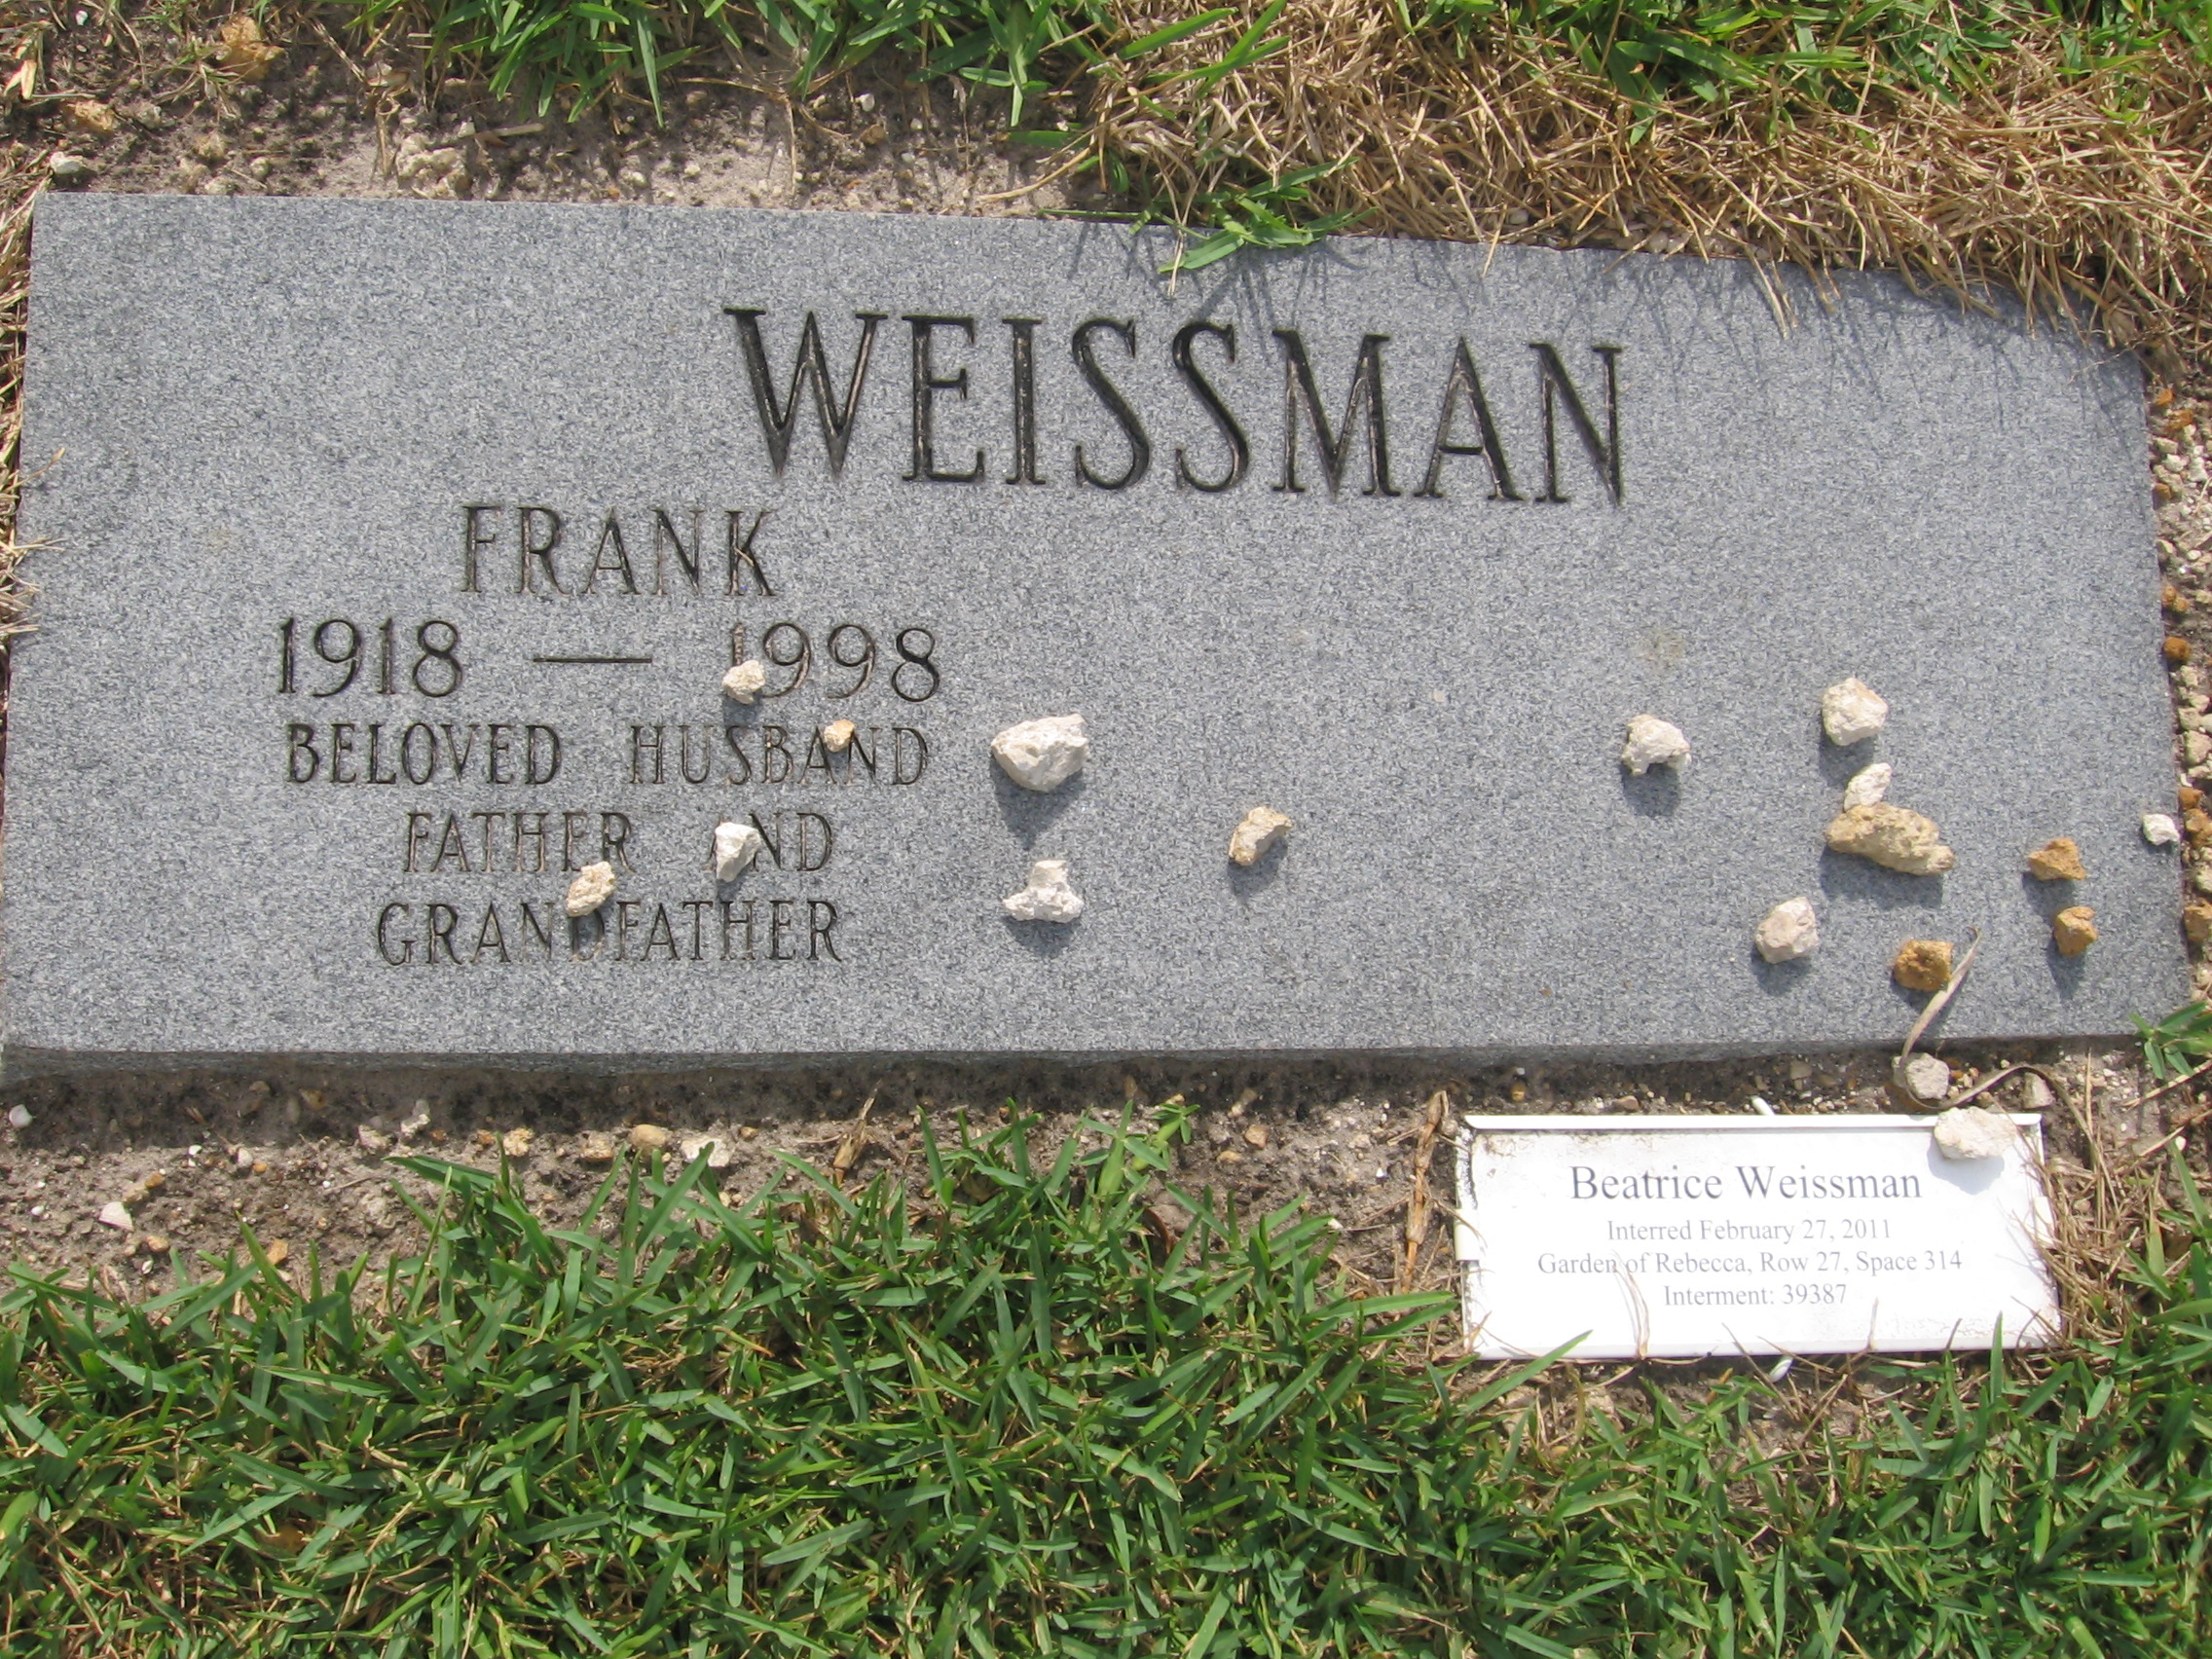 Frank Weissman